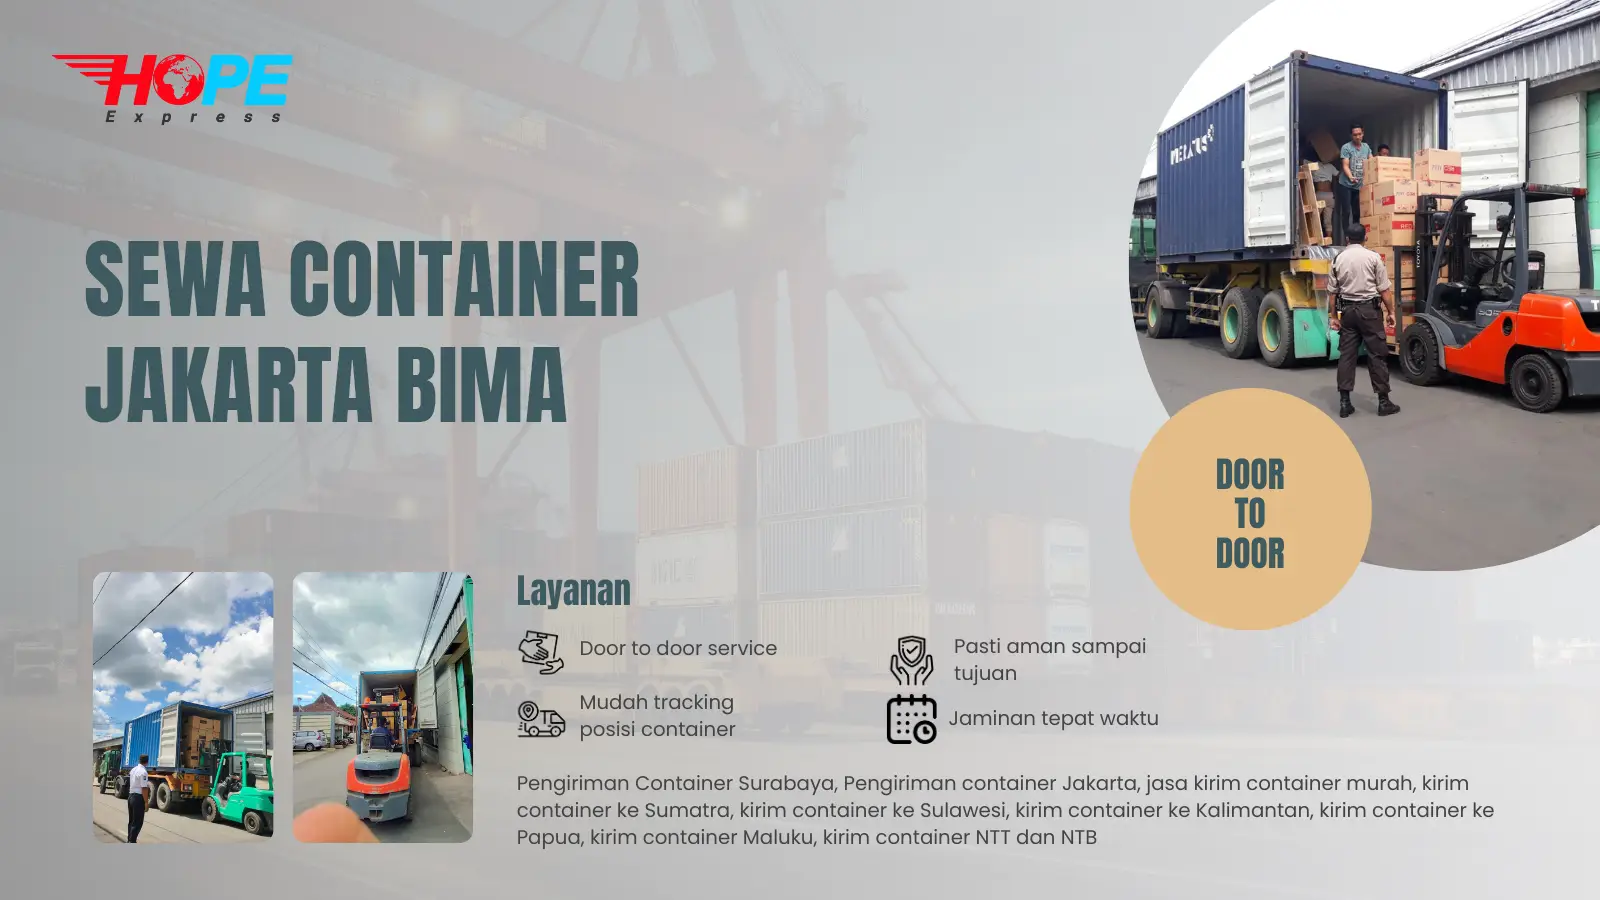 Sewa Container Jakarta Bima